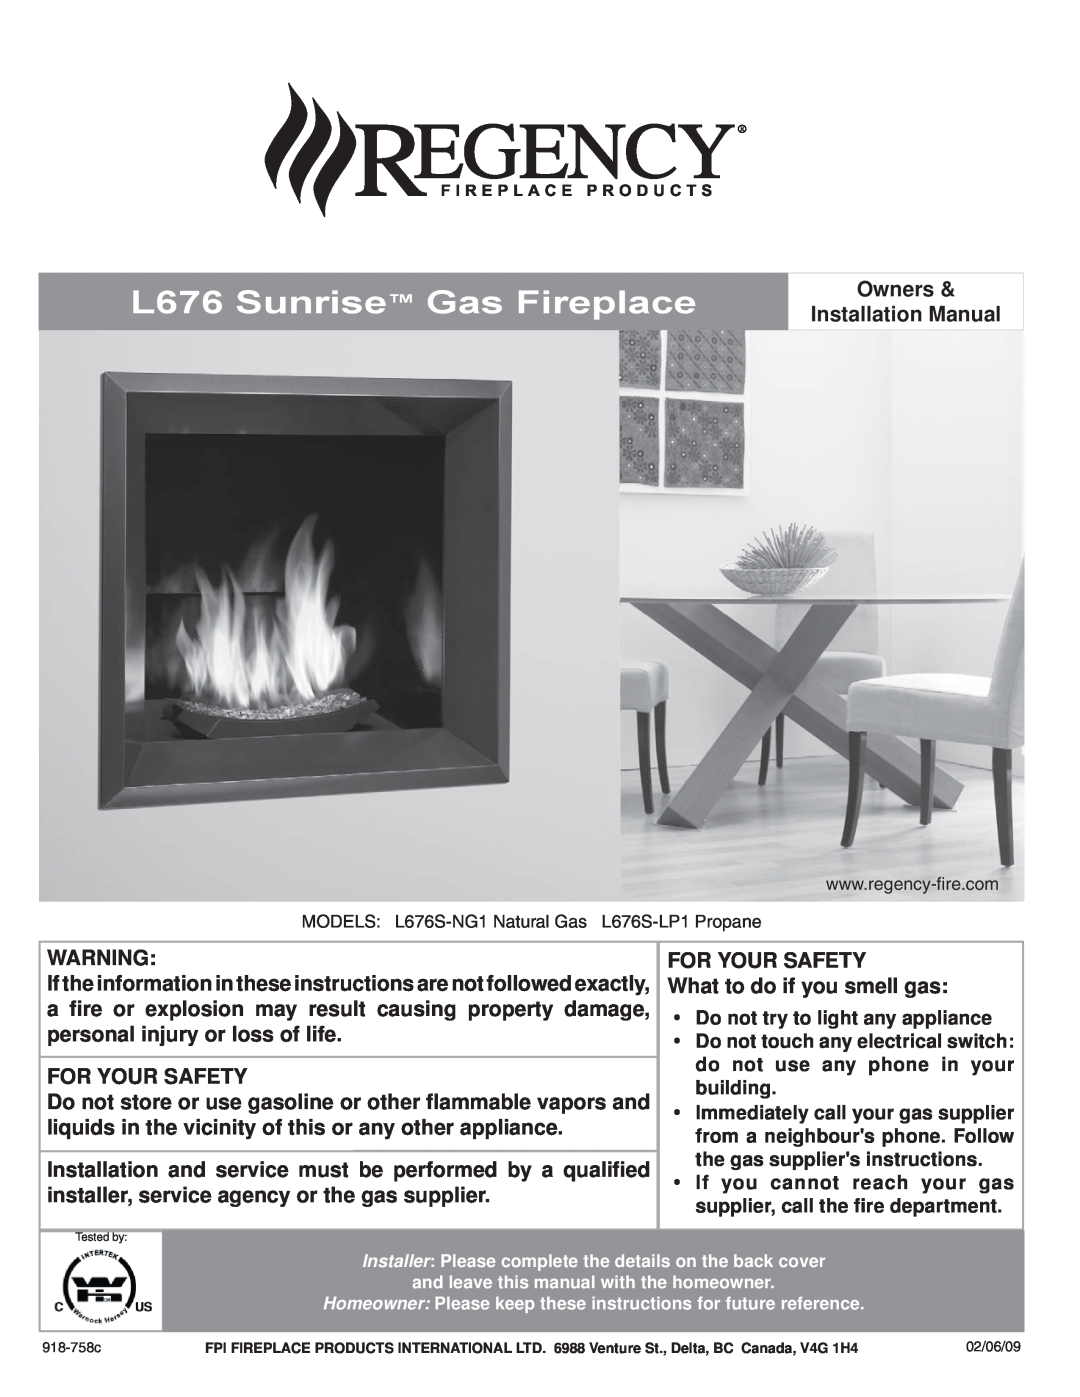 Regency L676S-NG1 installation manual L676 Sunrise Gas Fireplace 